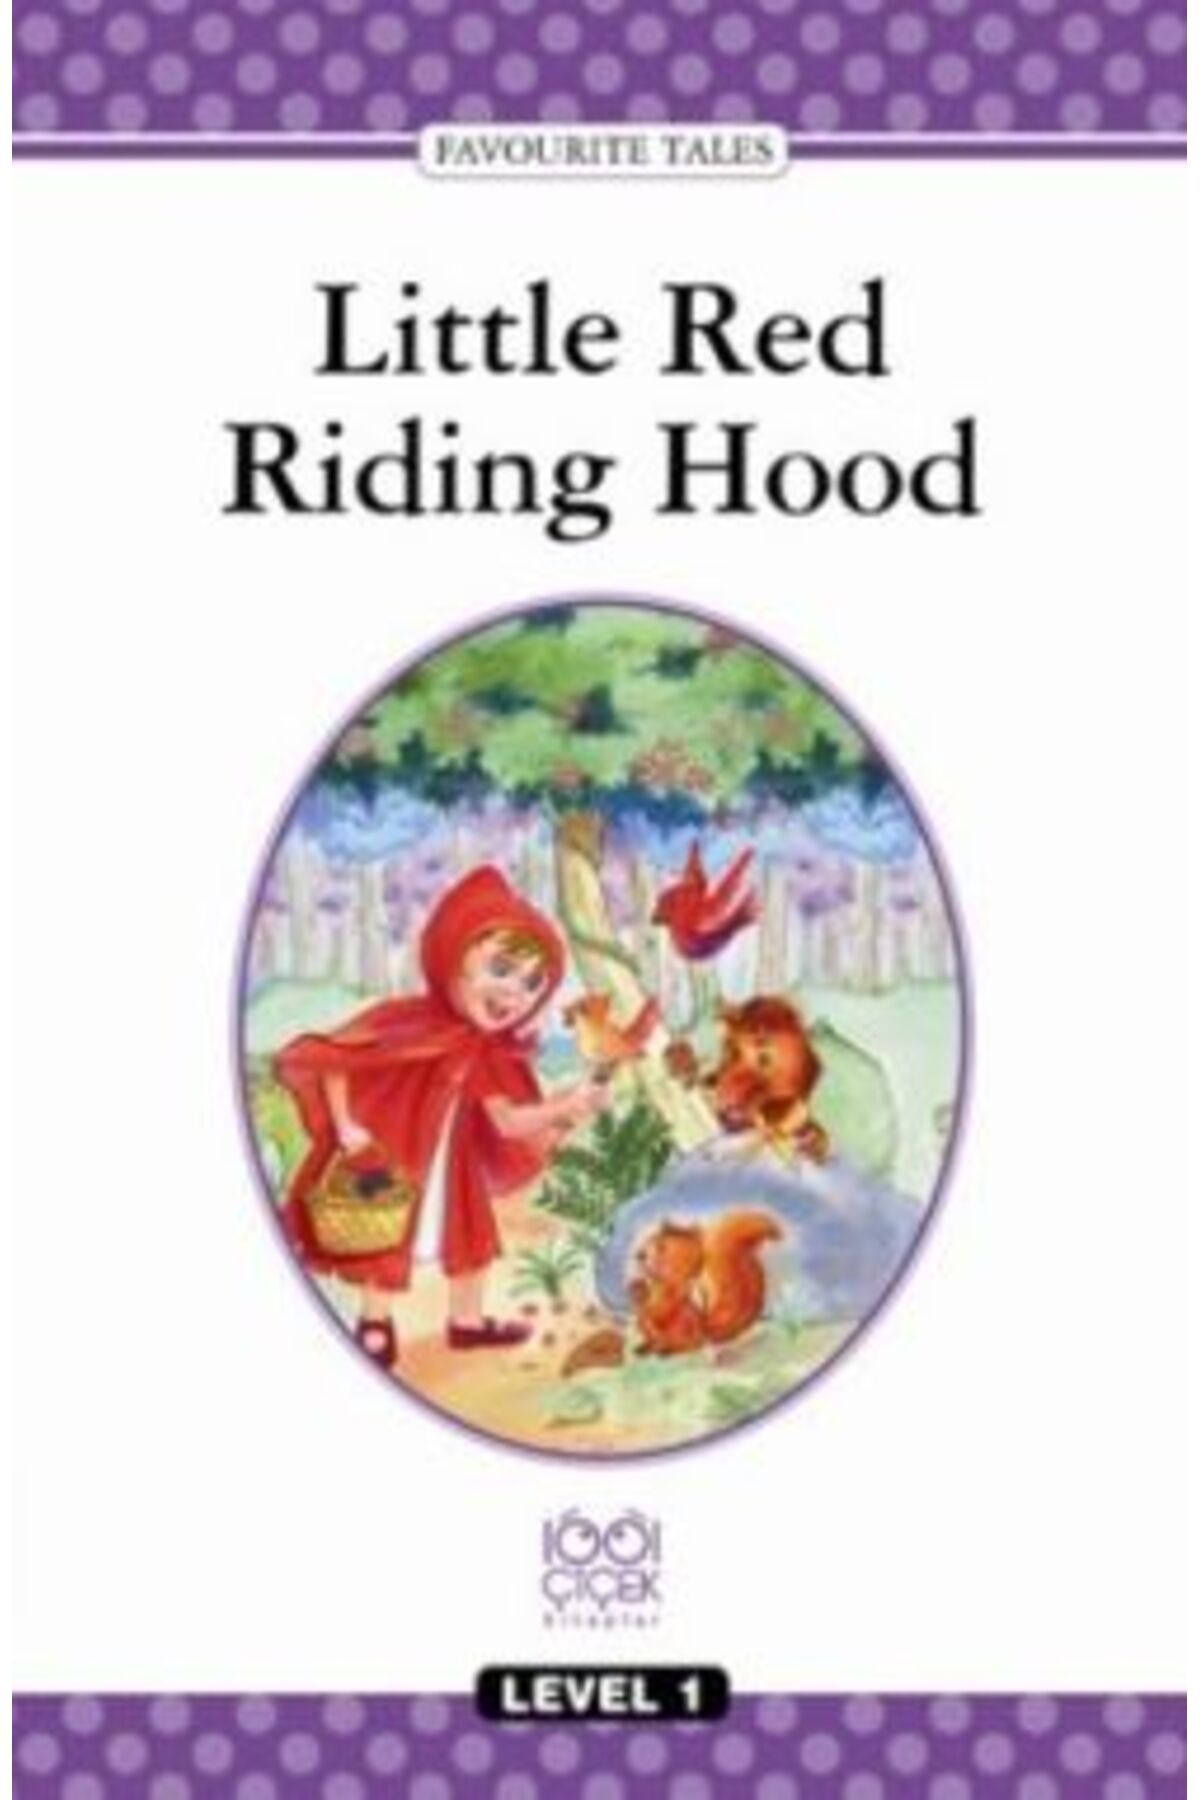 1001 Çiçek Kitaplar Little Red Riding Hood Level 1 Books